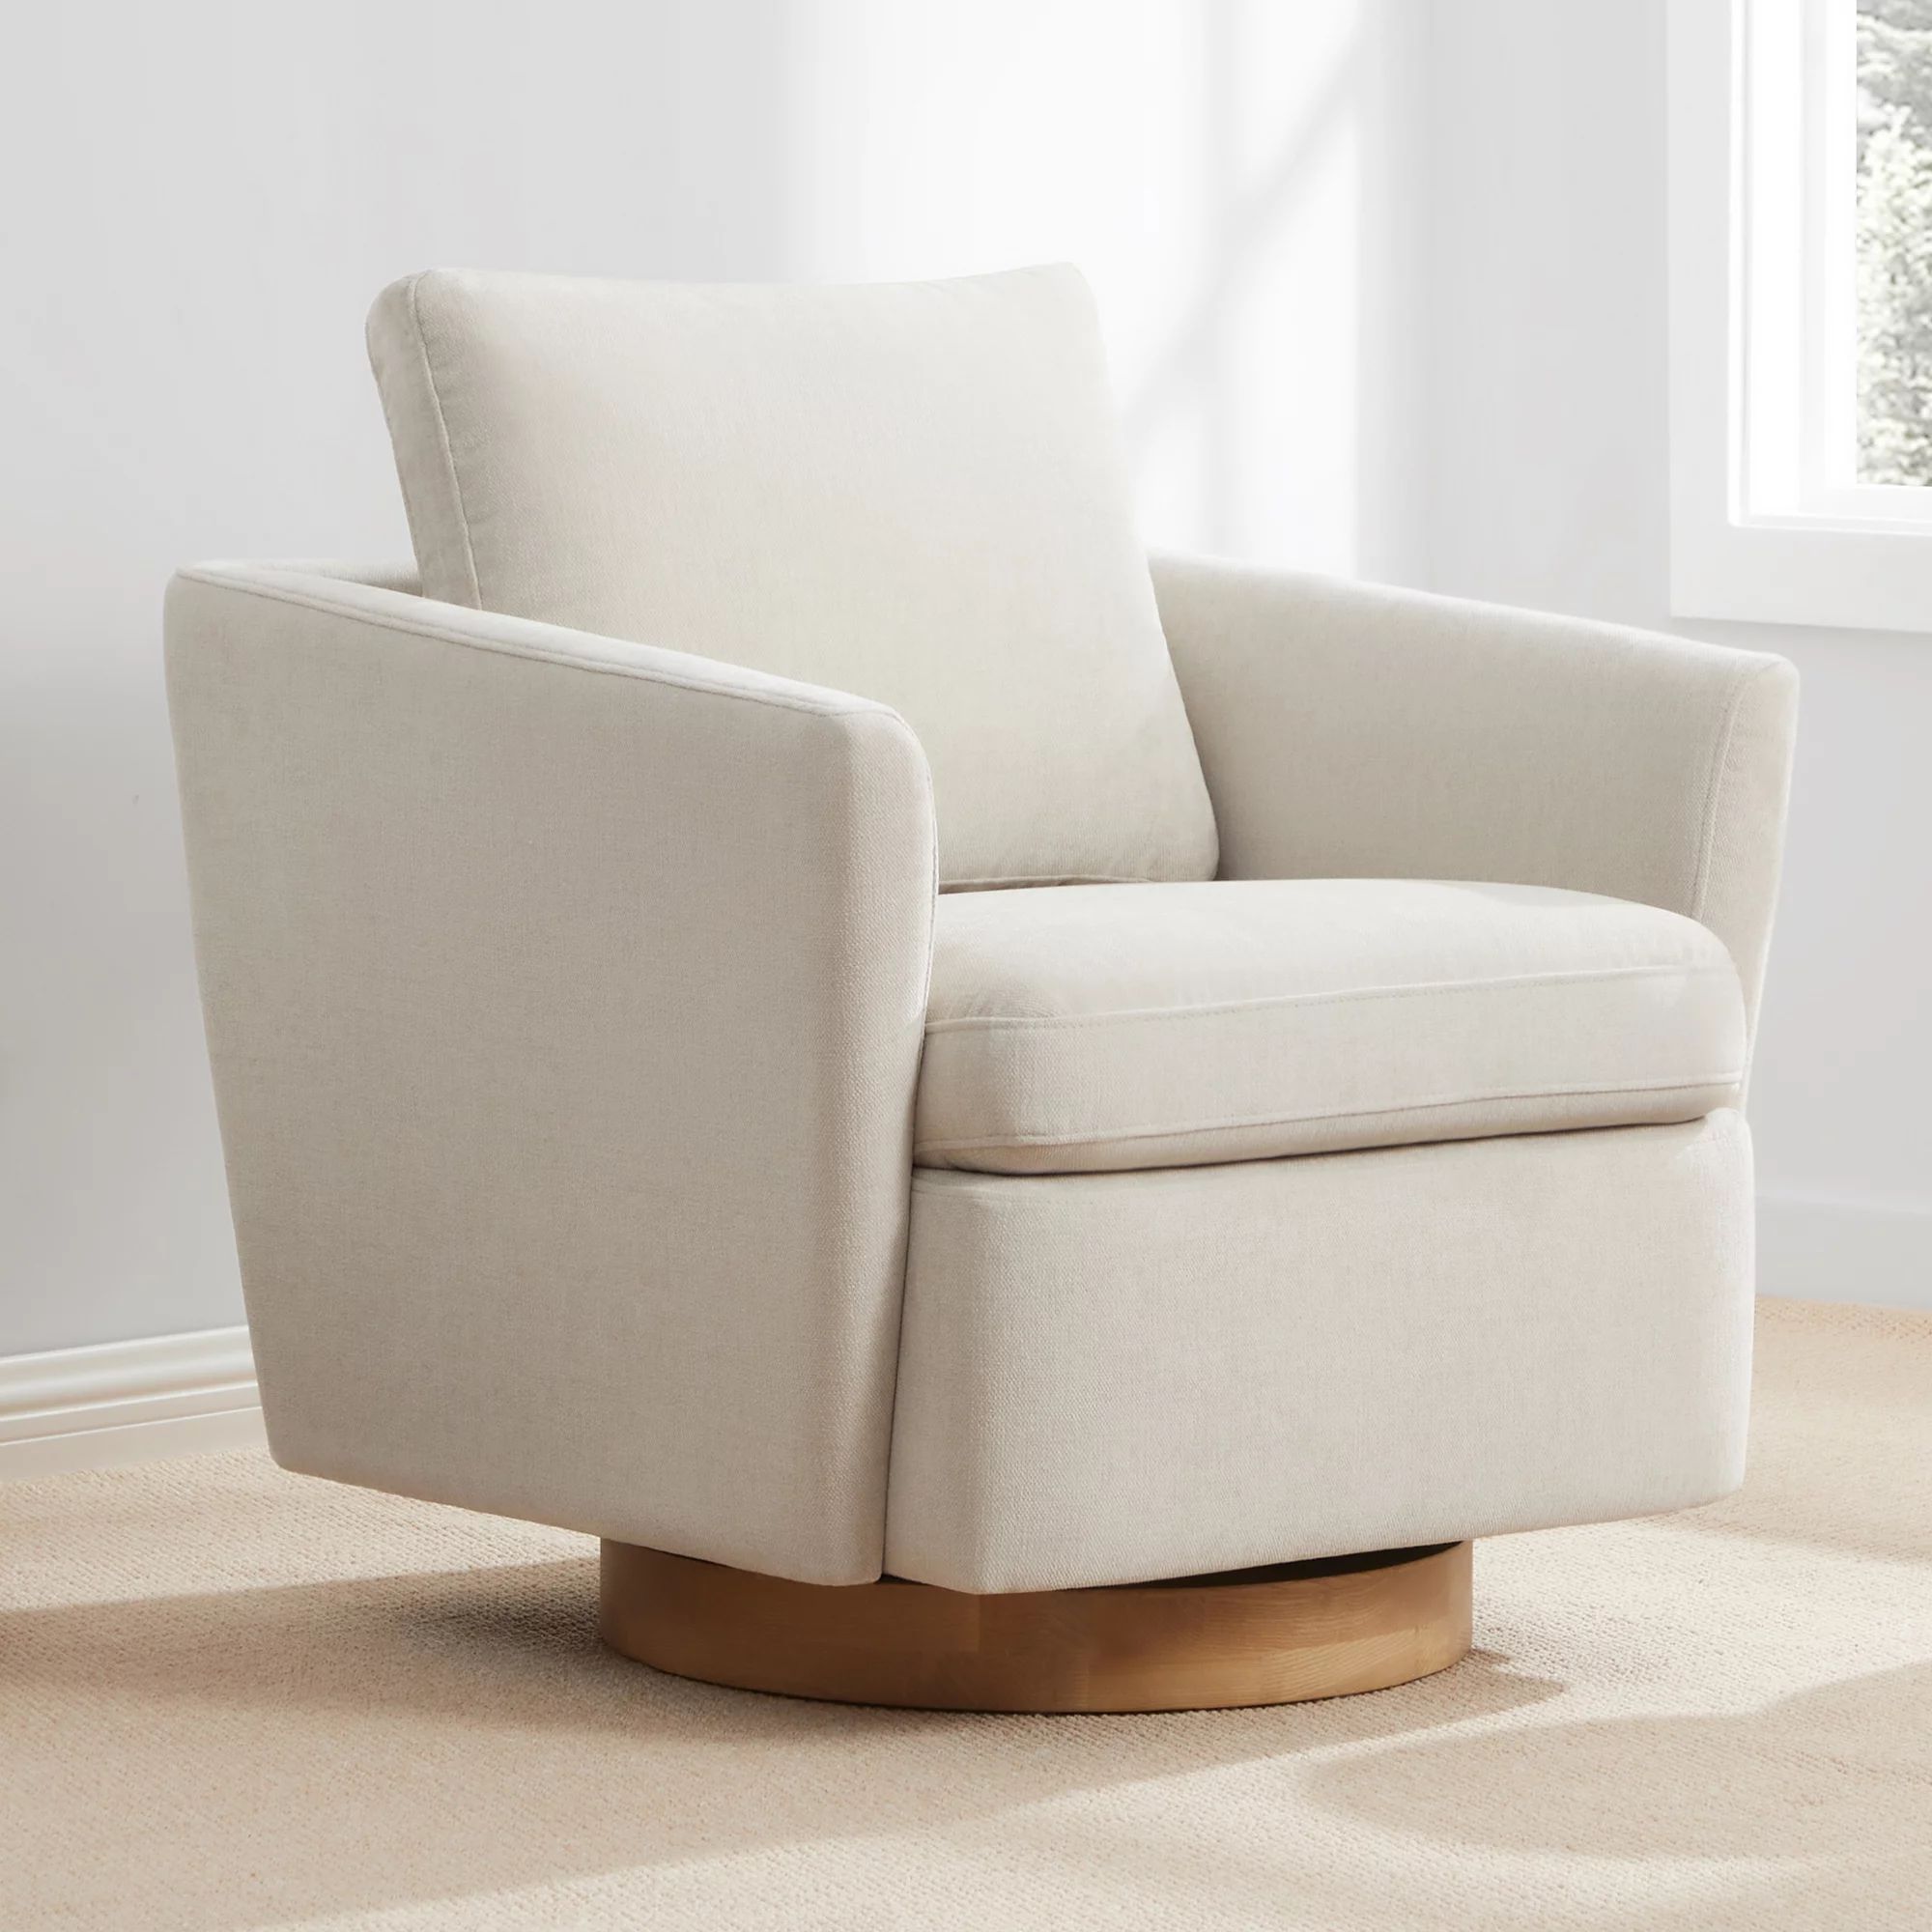 CHITA Modern Swivel Accent Chairs, Fabric in Cream White - Walmart.com | Walmart (US)